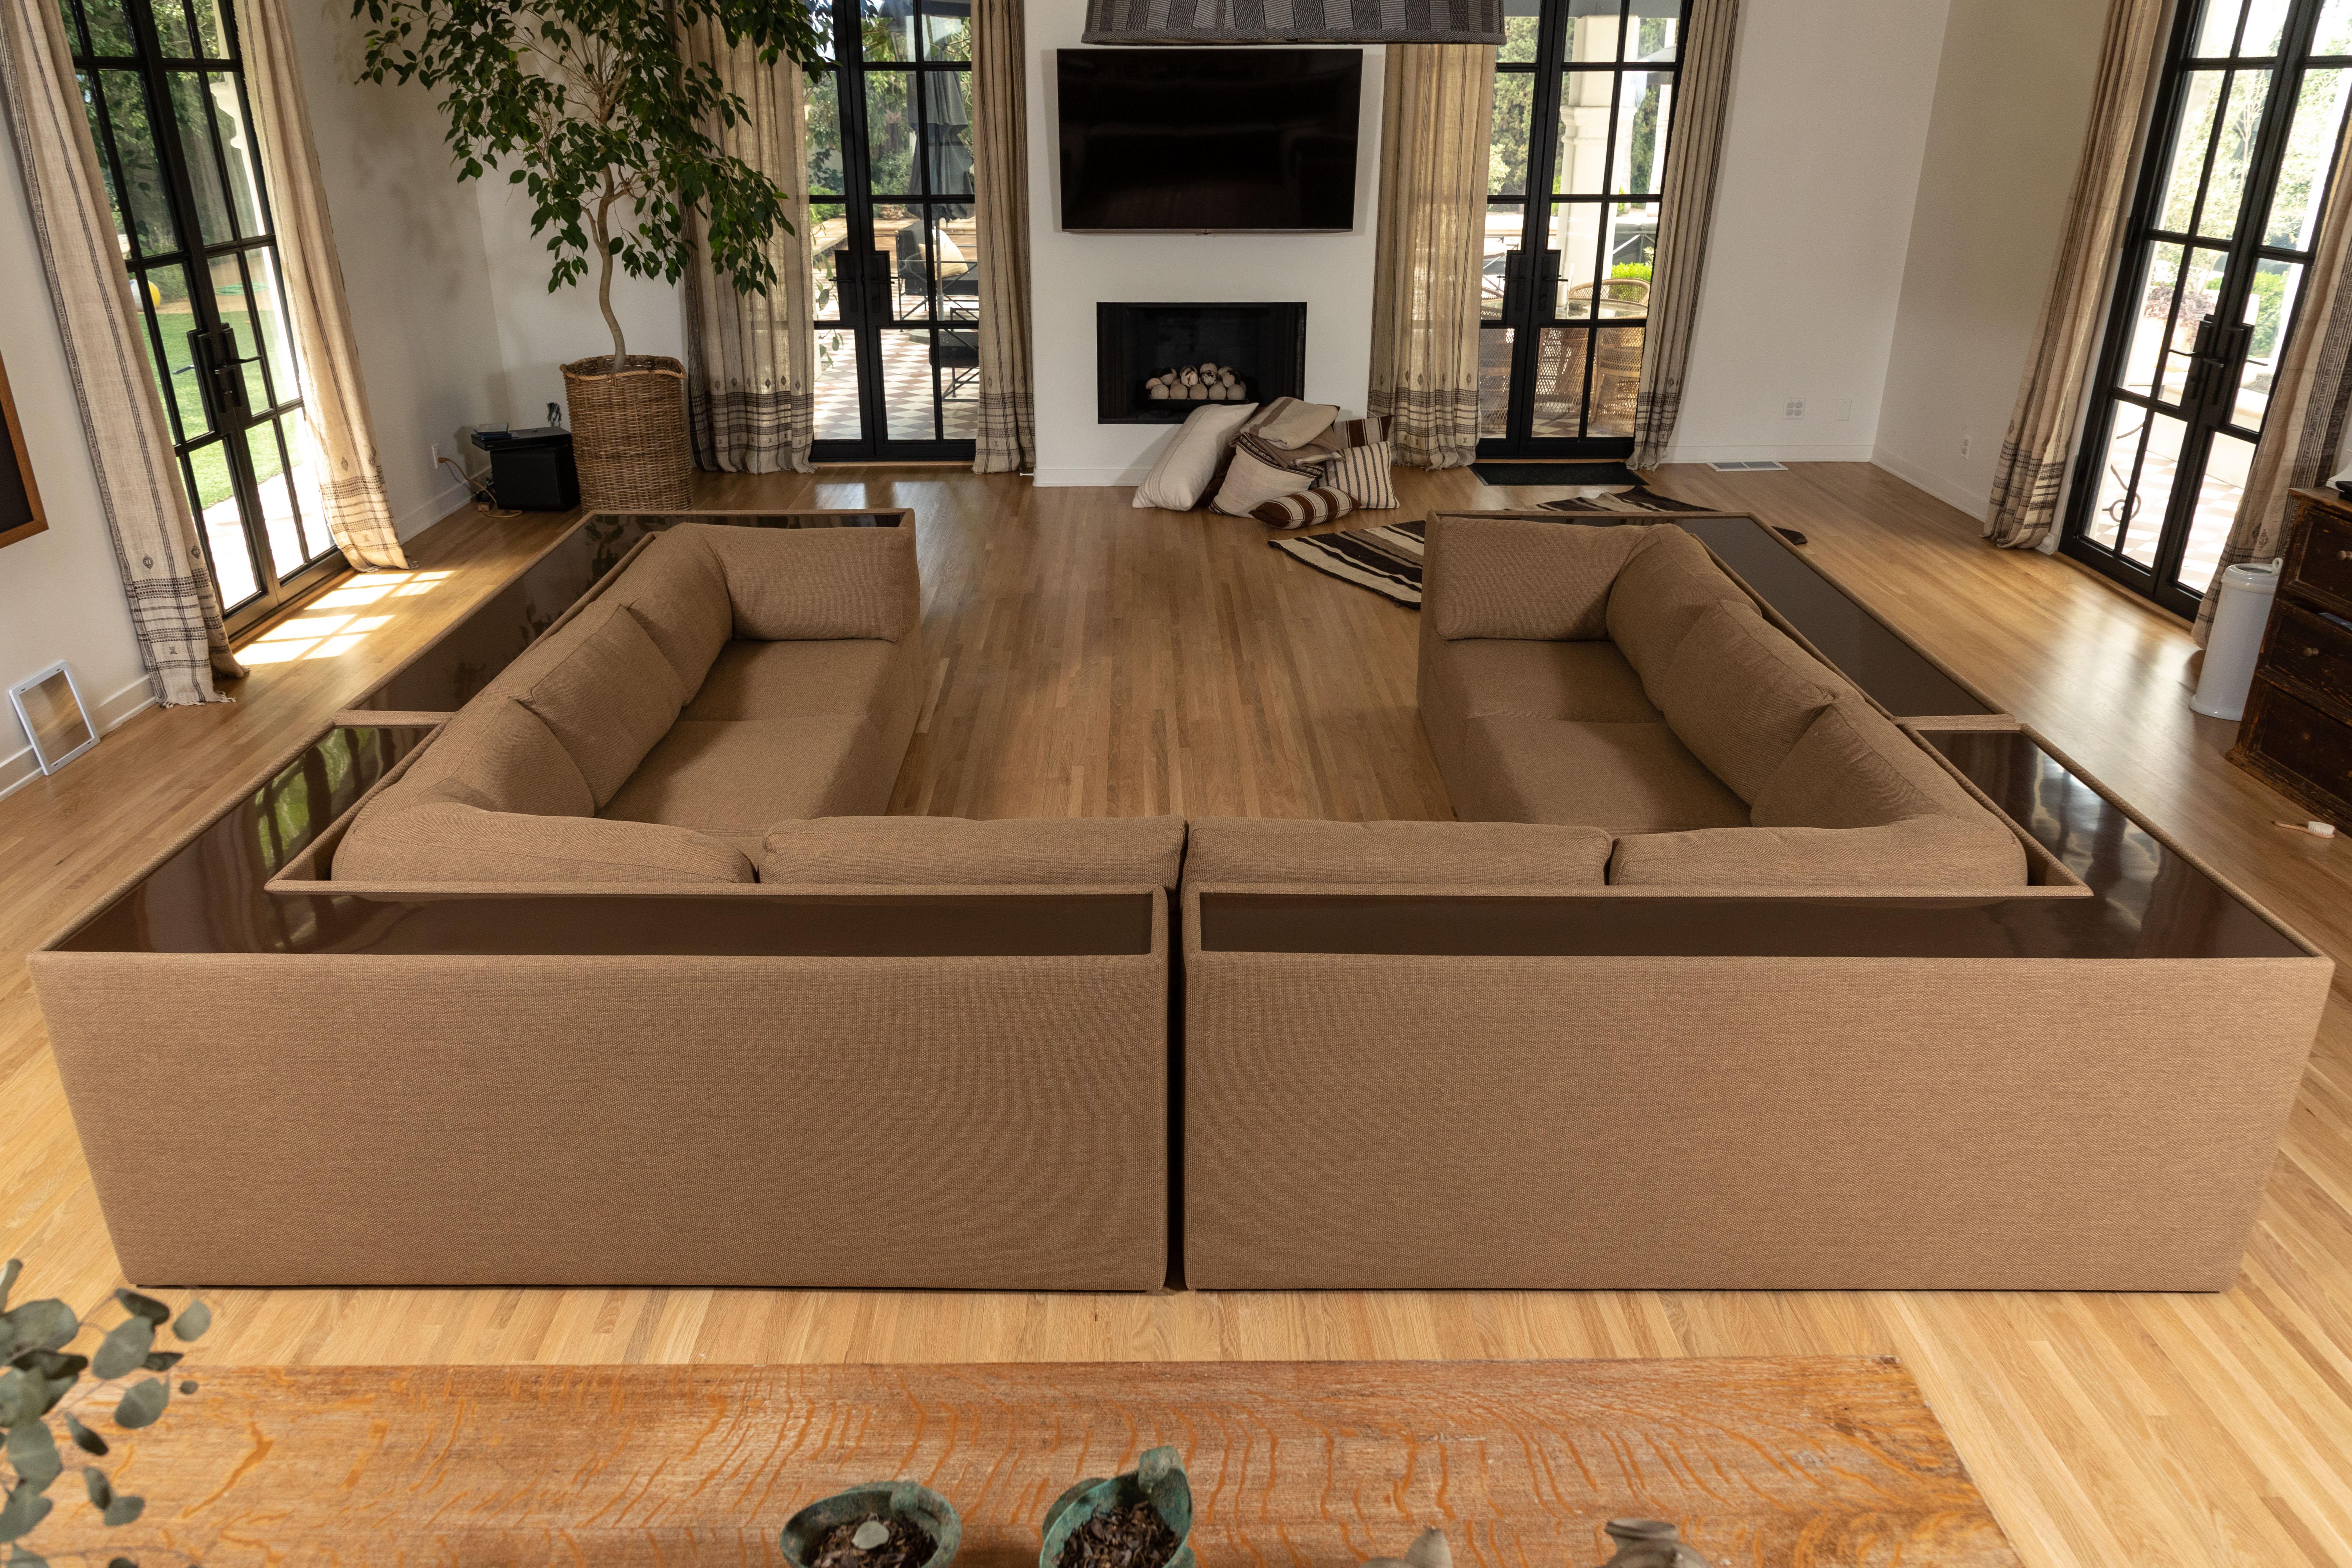 Upholstery Four-Piece Milo Baughman Sectional Sofa with Original Polymer Shelf Back